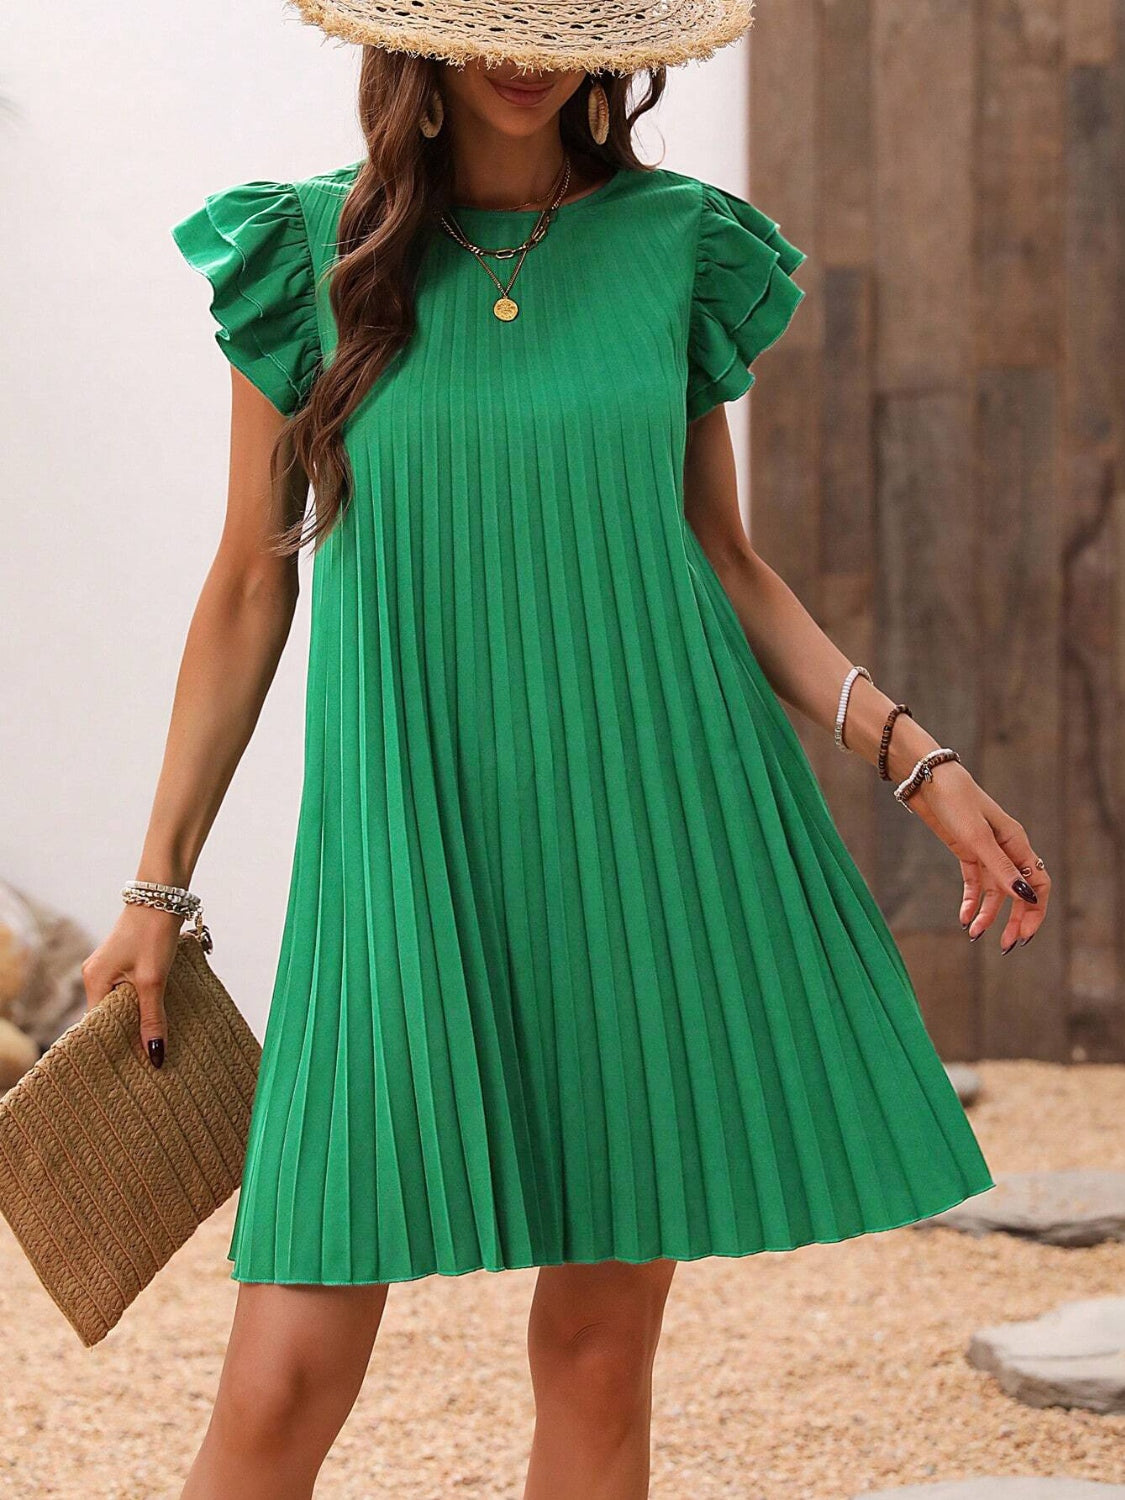 TEEK - Dark Green Pleated Round Neck Cap Sleeve Dress DRESS TEEK Trend   